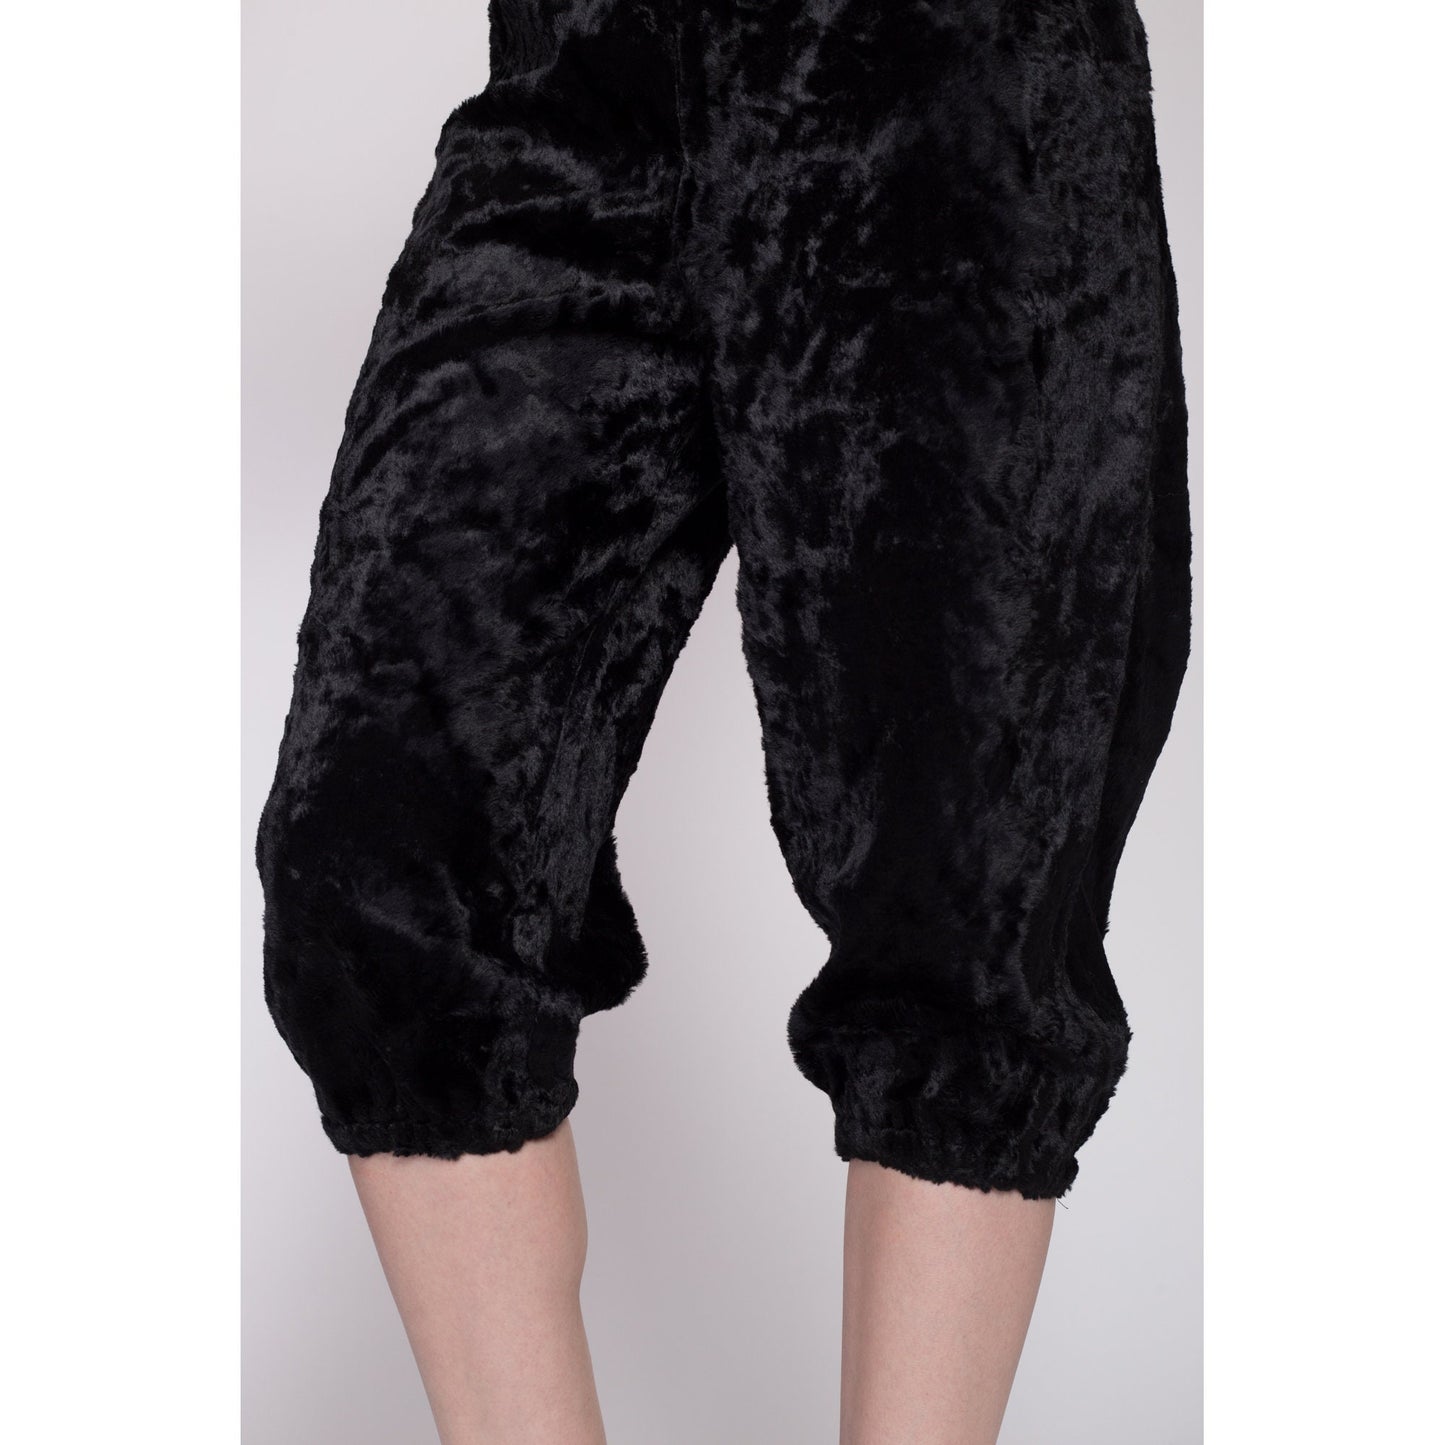 S| 1960s Black Plush Velvet Knickerbocker Pants - Small, 27" | Vintage 60s High Waist Retro Cropped Pedal Pusher Knickers